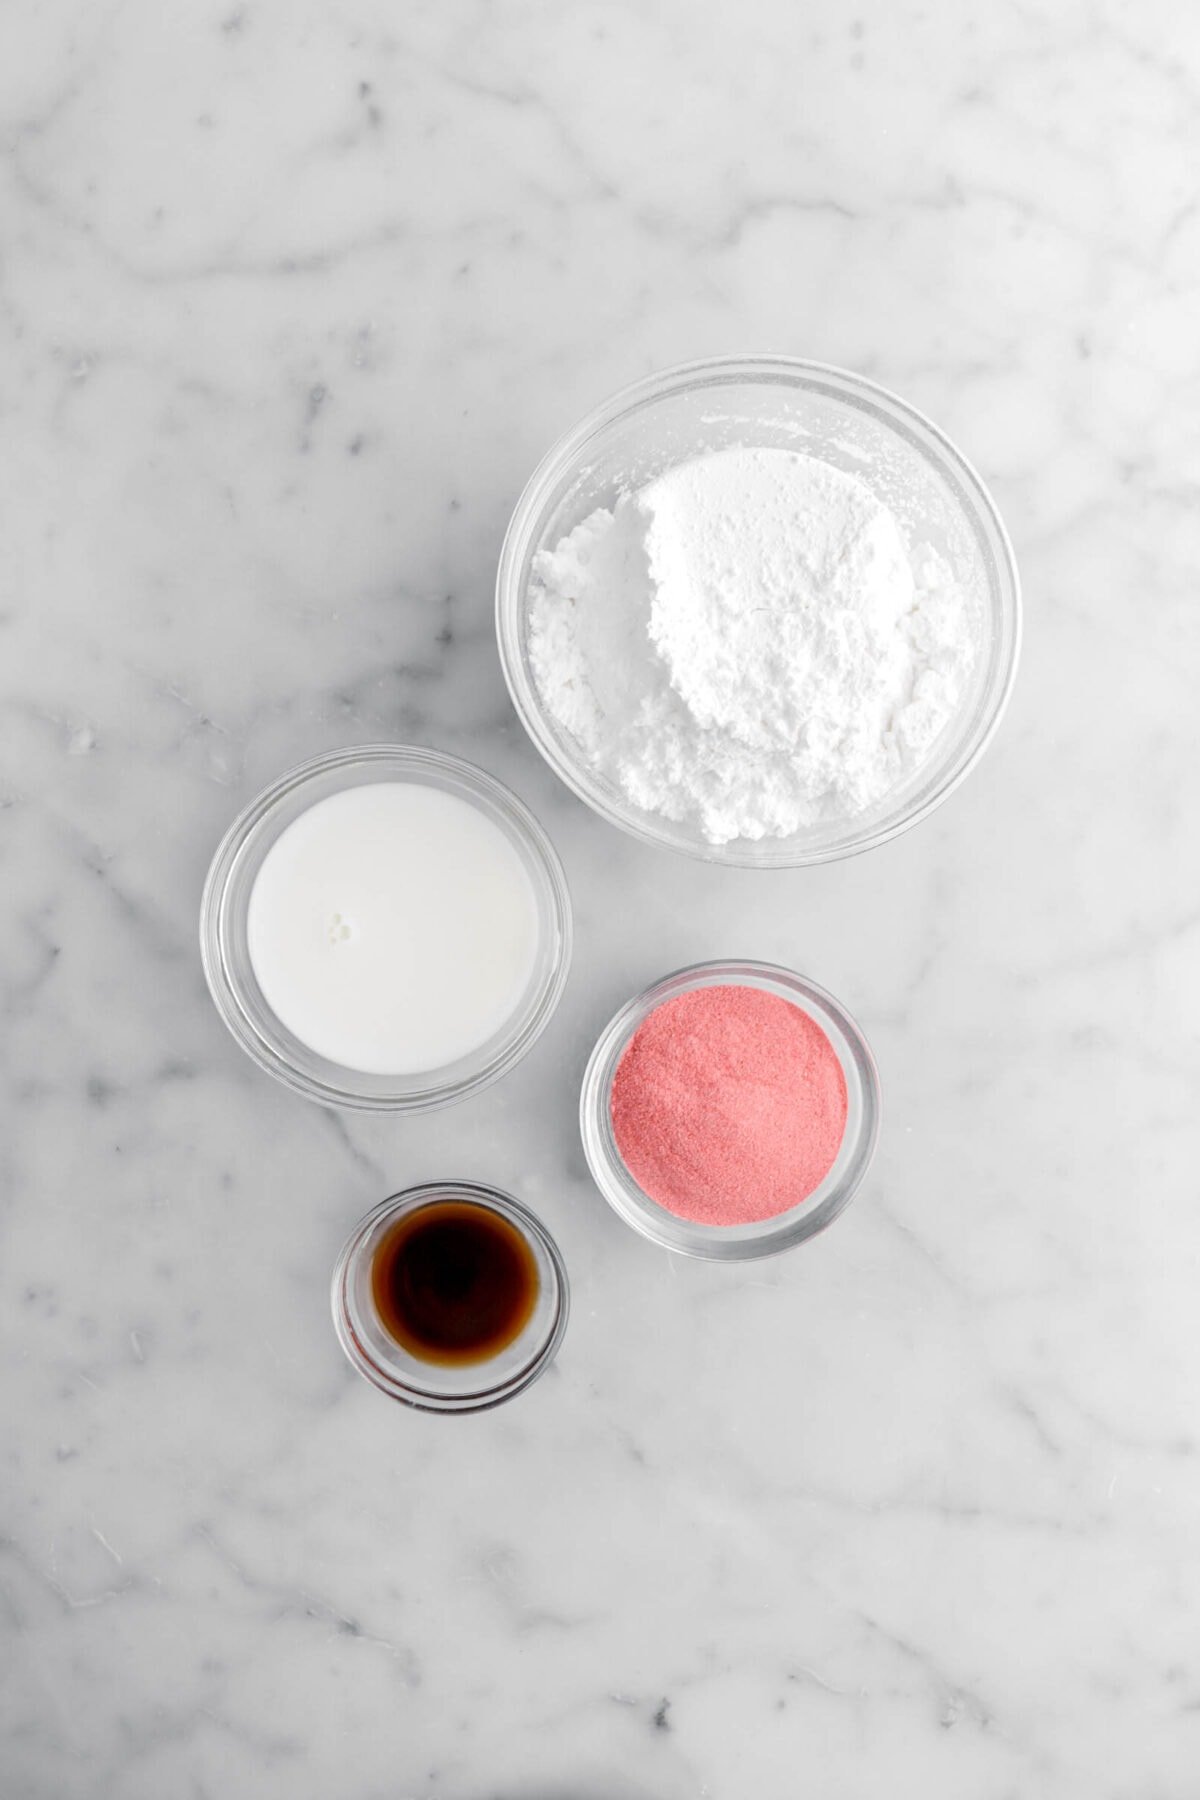 powdered sugar, milk strawberry powder, and vanilla on marble surface.